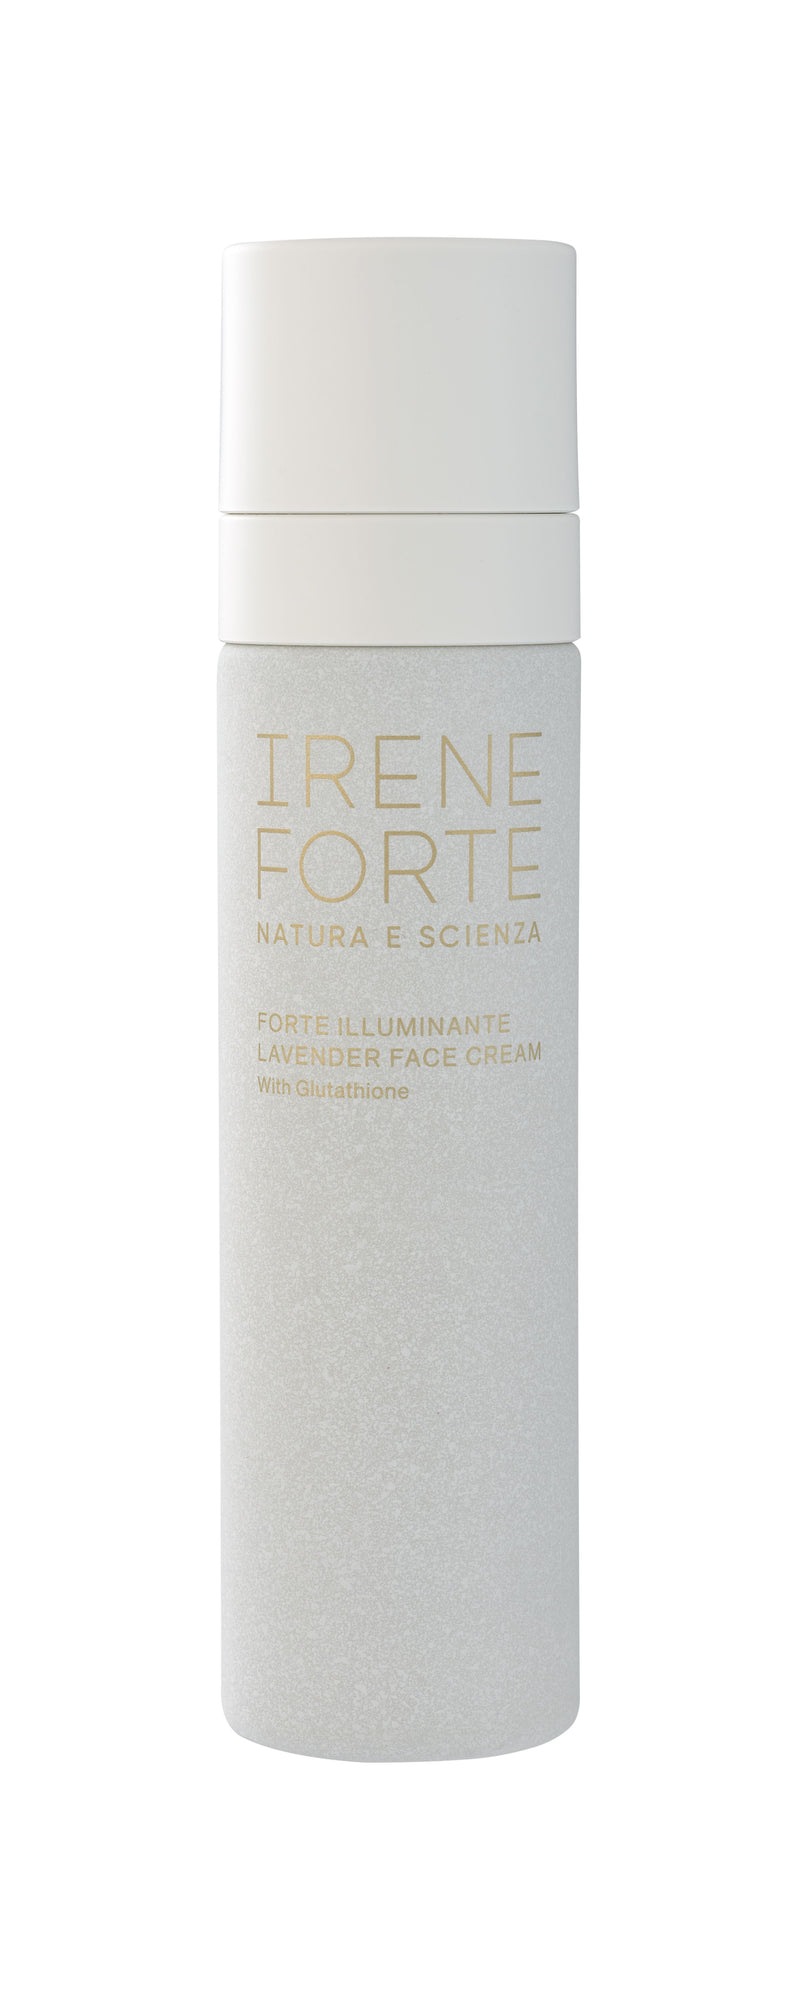 Irene Forte Lavender Face Cream with Glutathione 50ml